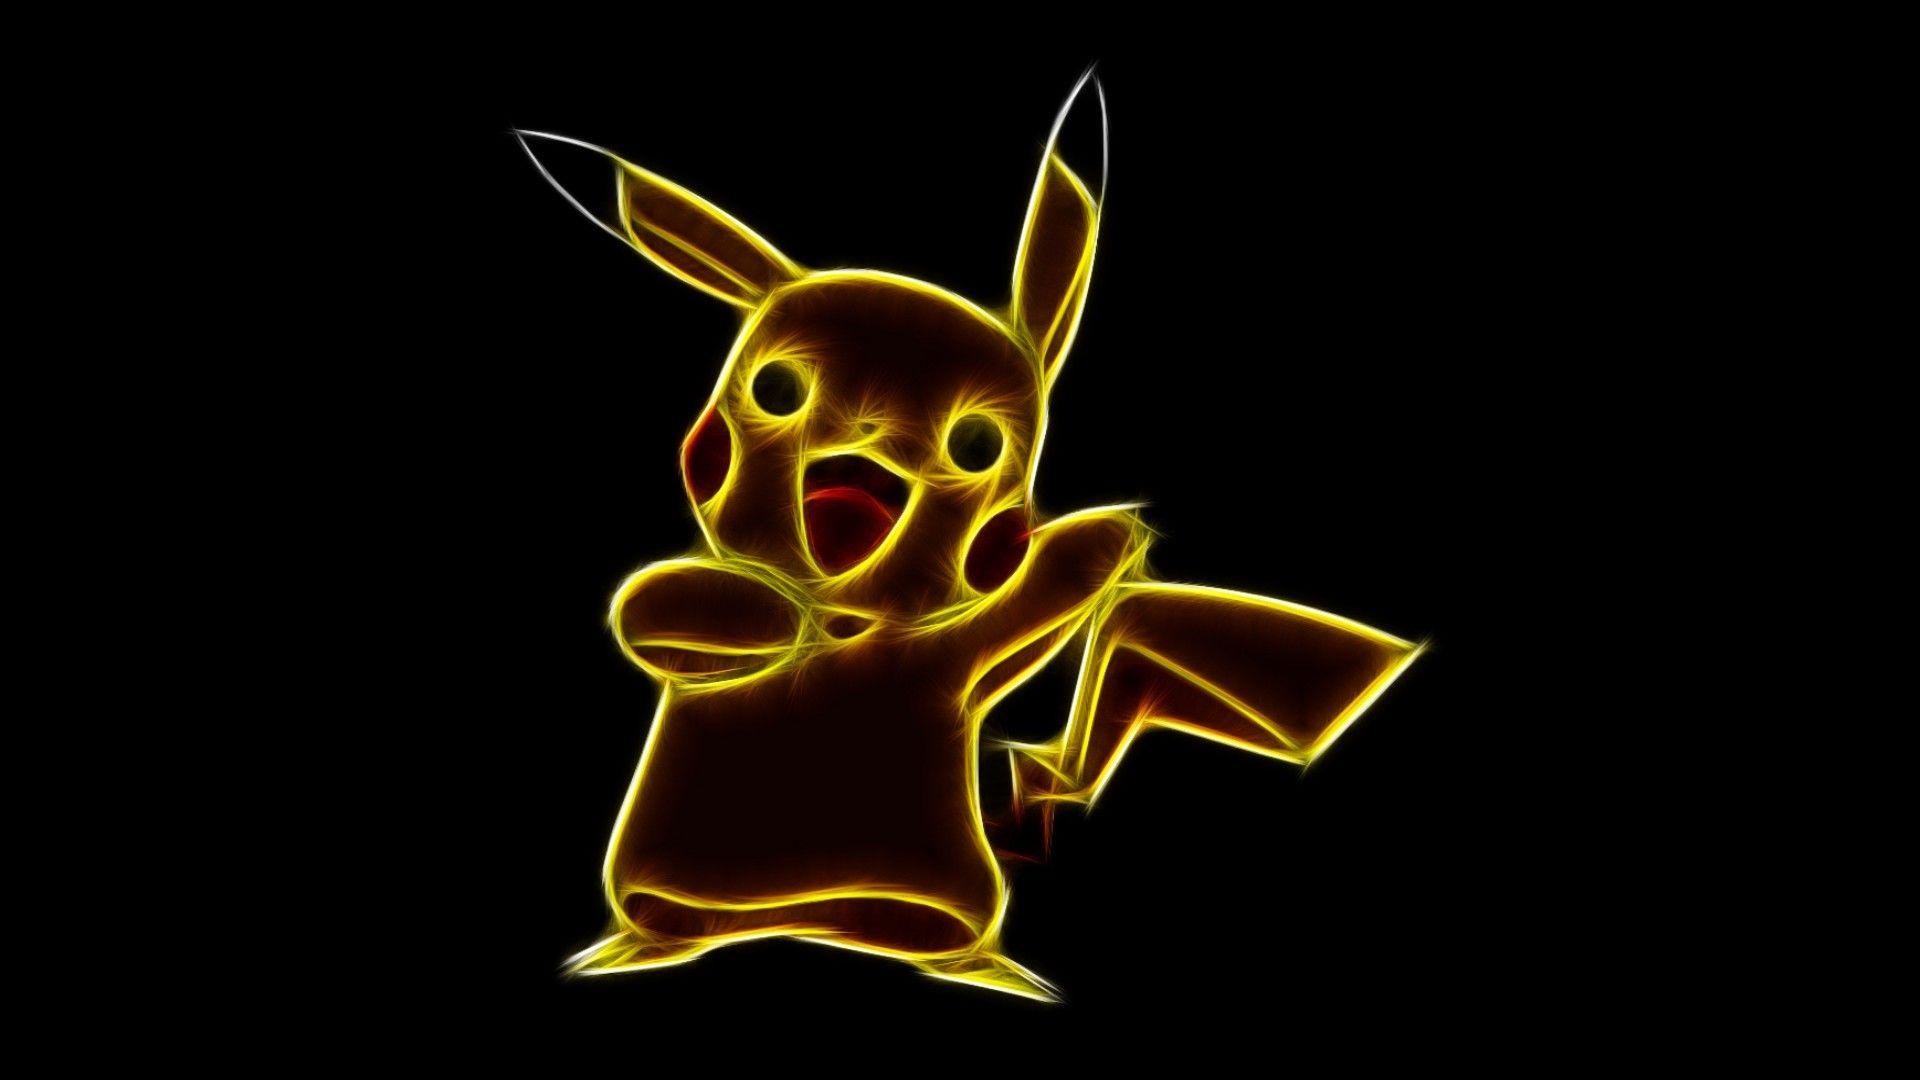 Cool Pikachu Wallpaper